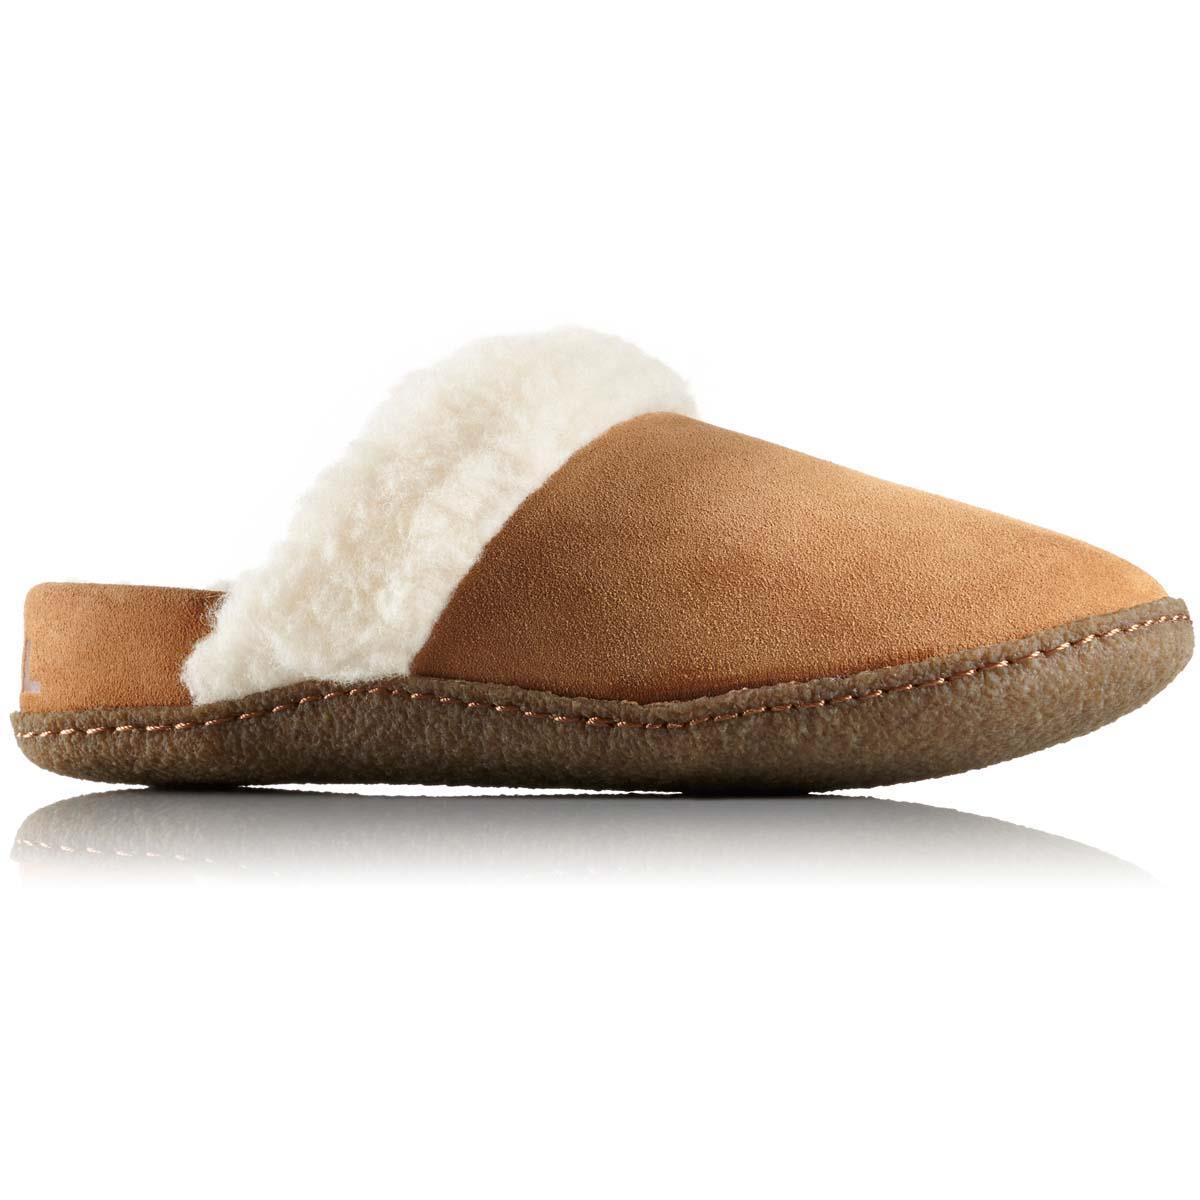 Buy > sorel slippers women's nakiska > in stock